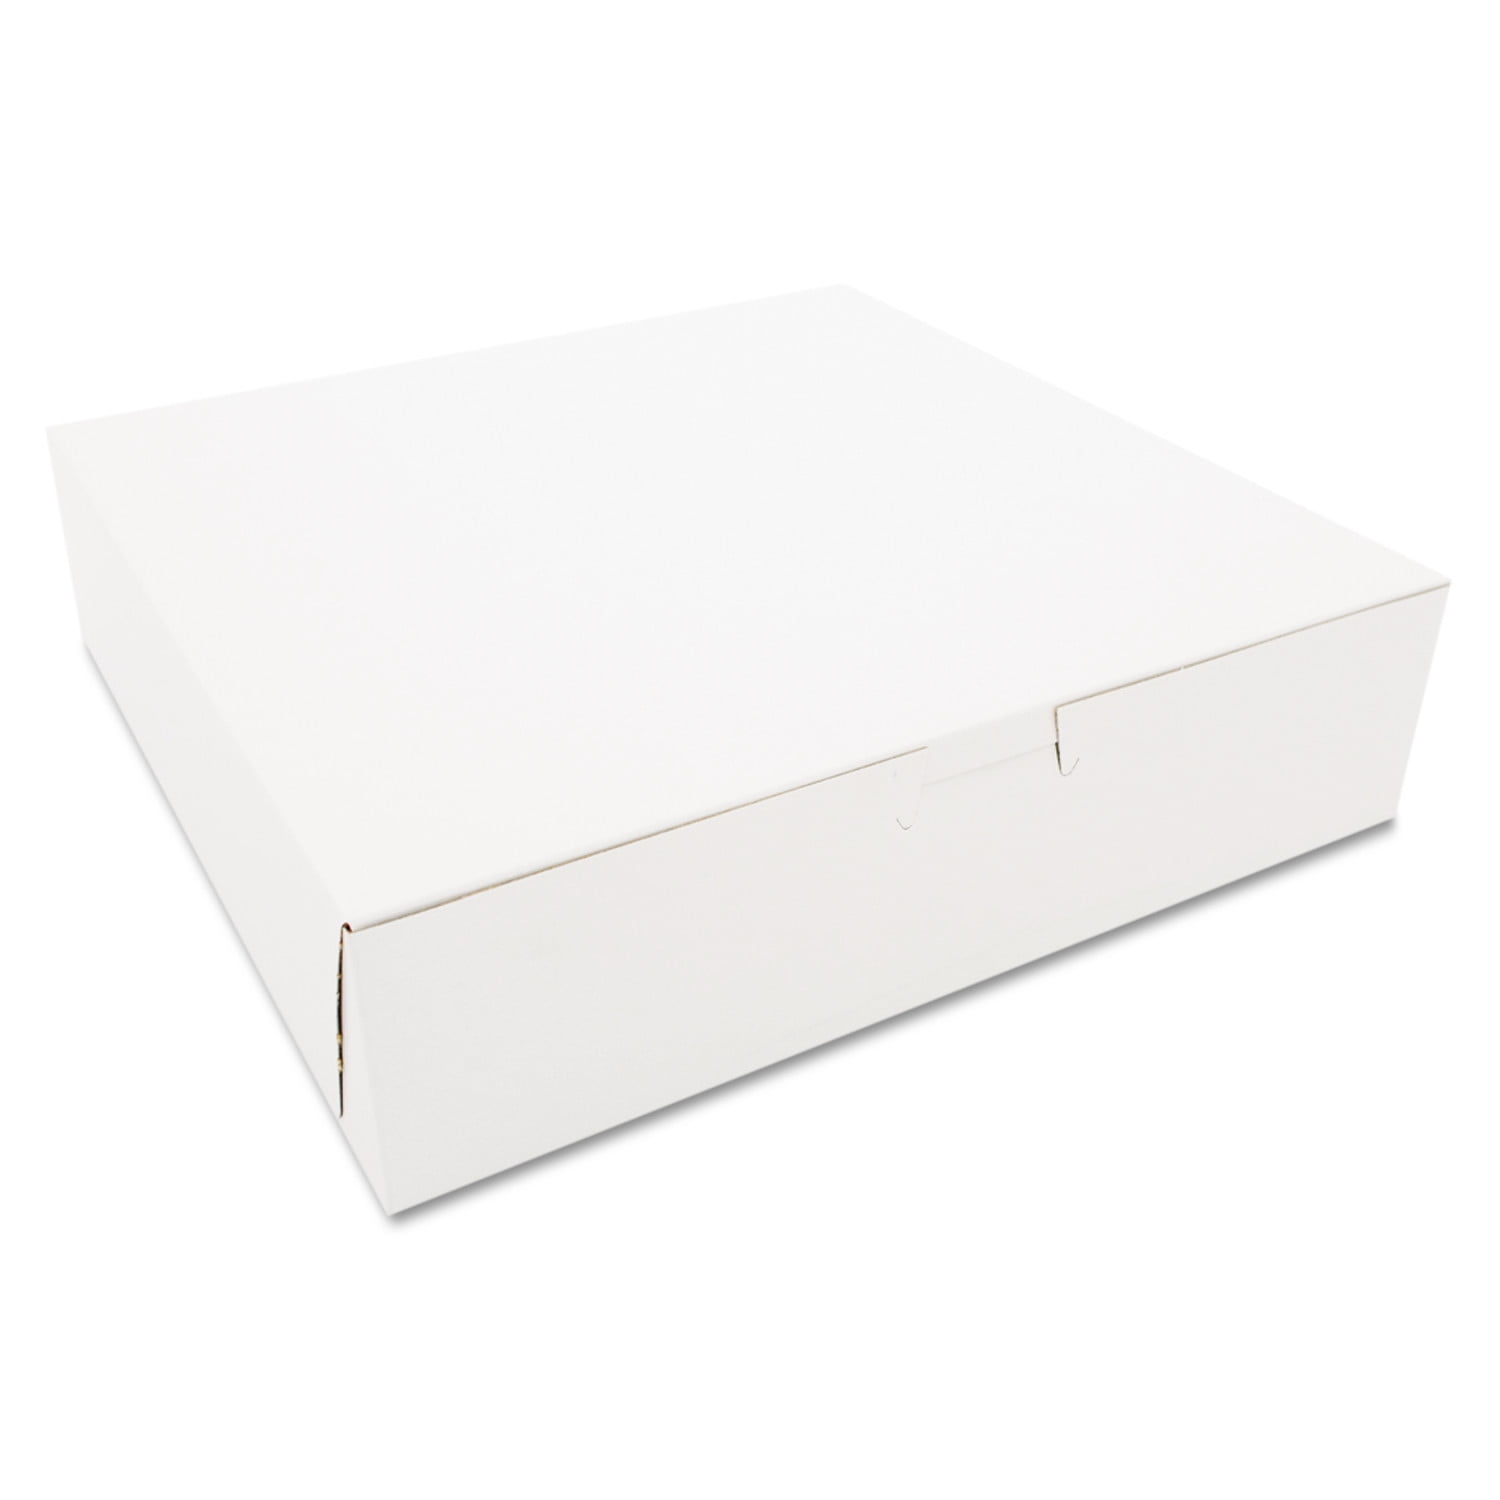 50-Piece SafePro 10104 10x10x4-Inch Cardboard Cake Boxes